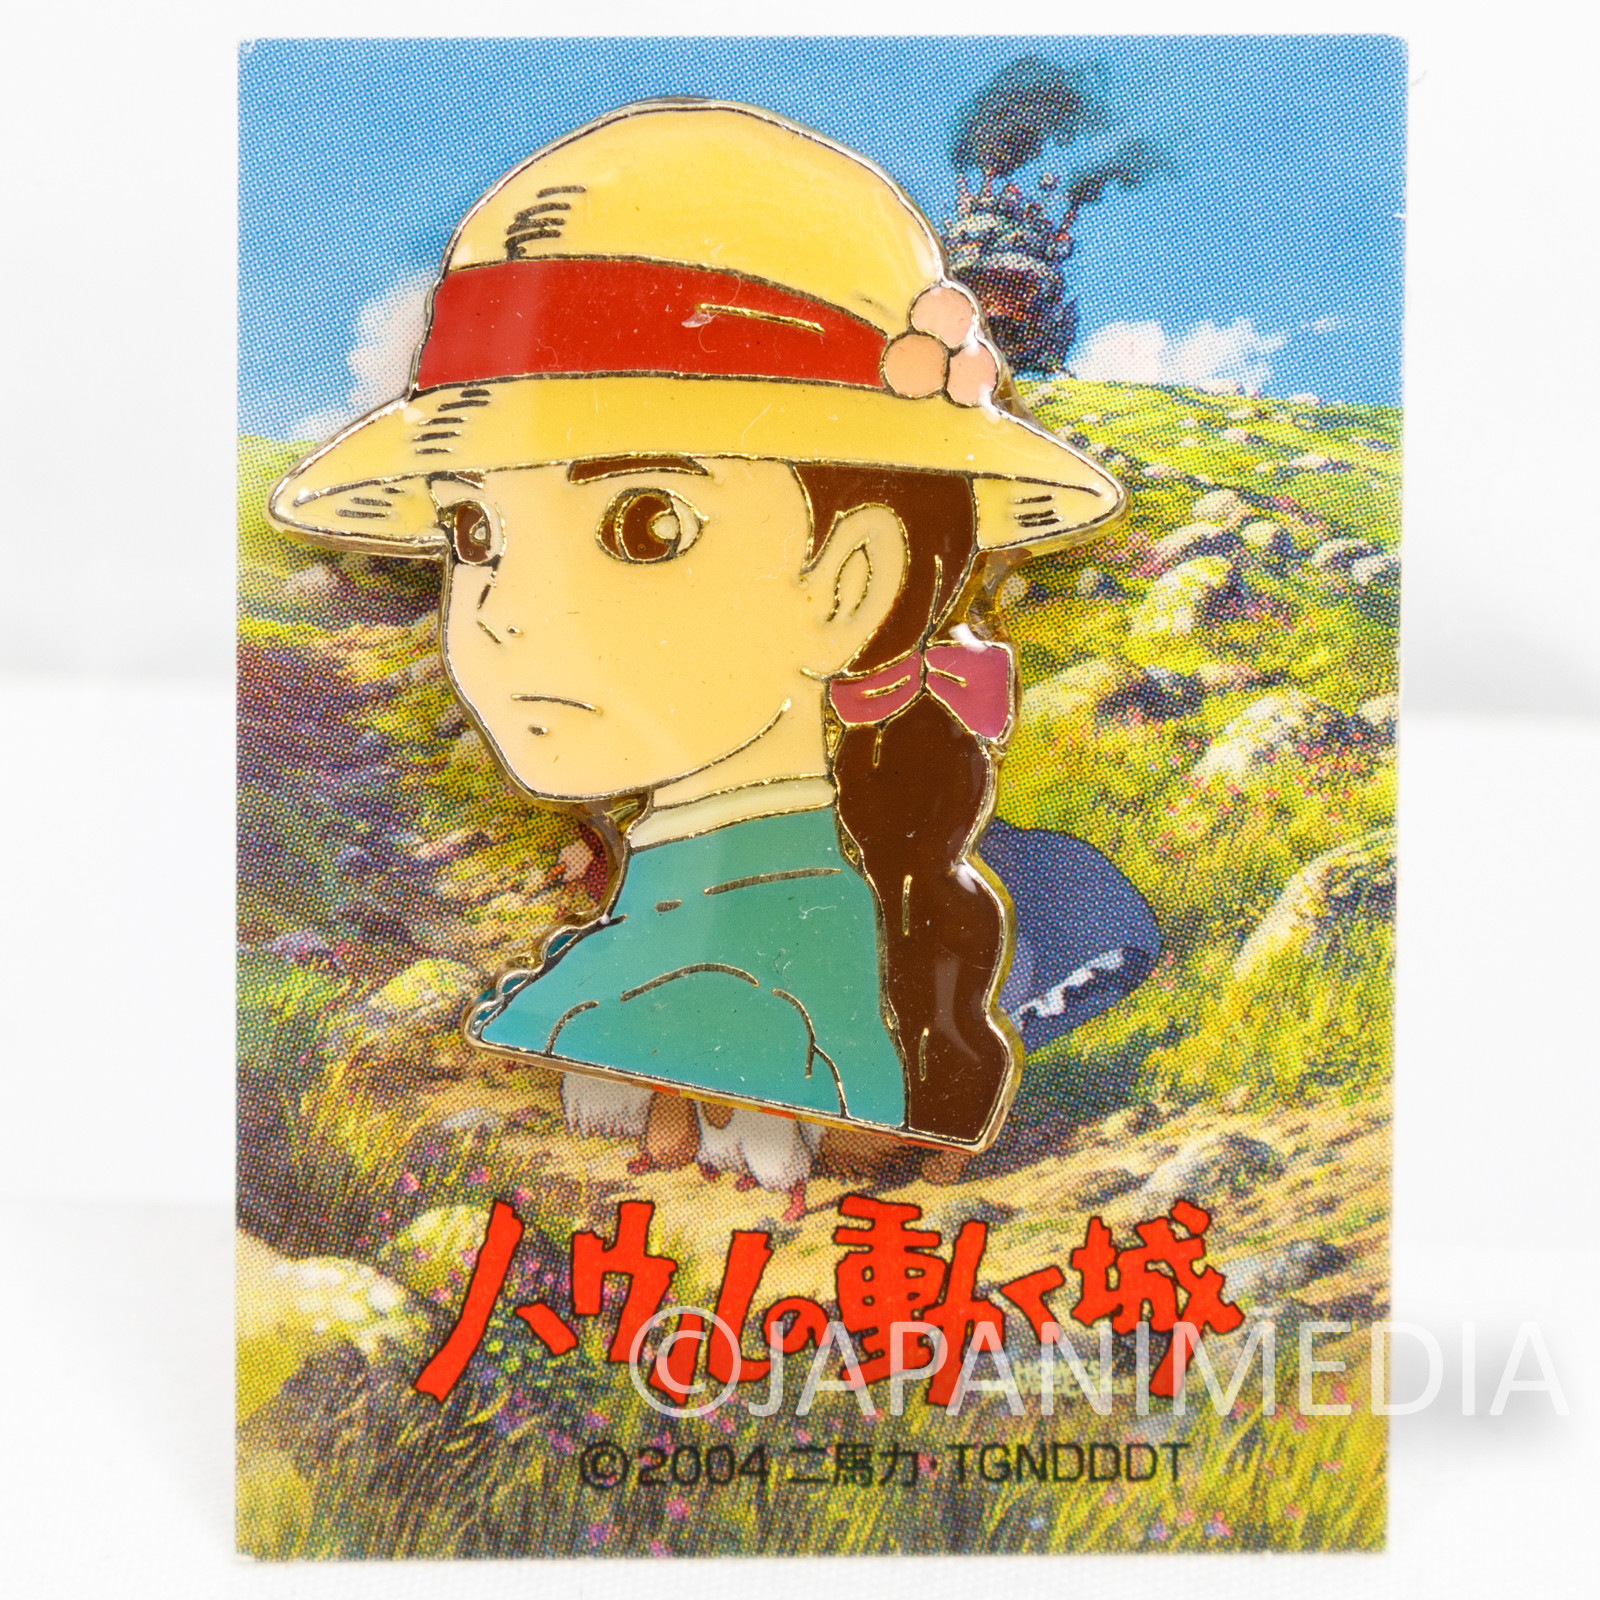 Howl's Moving Castle Sophie Hatter Character Pins Ghibli JAPAN